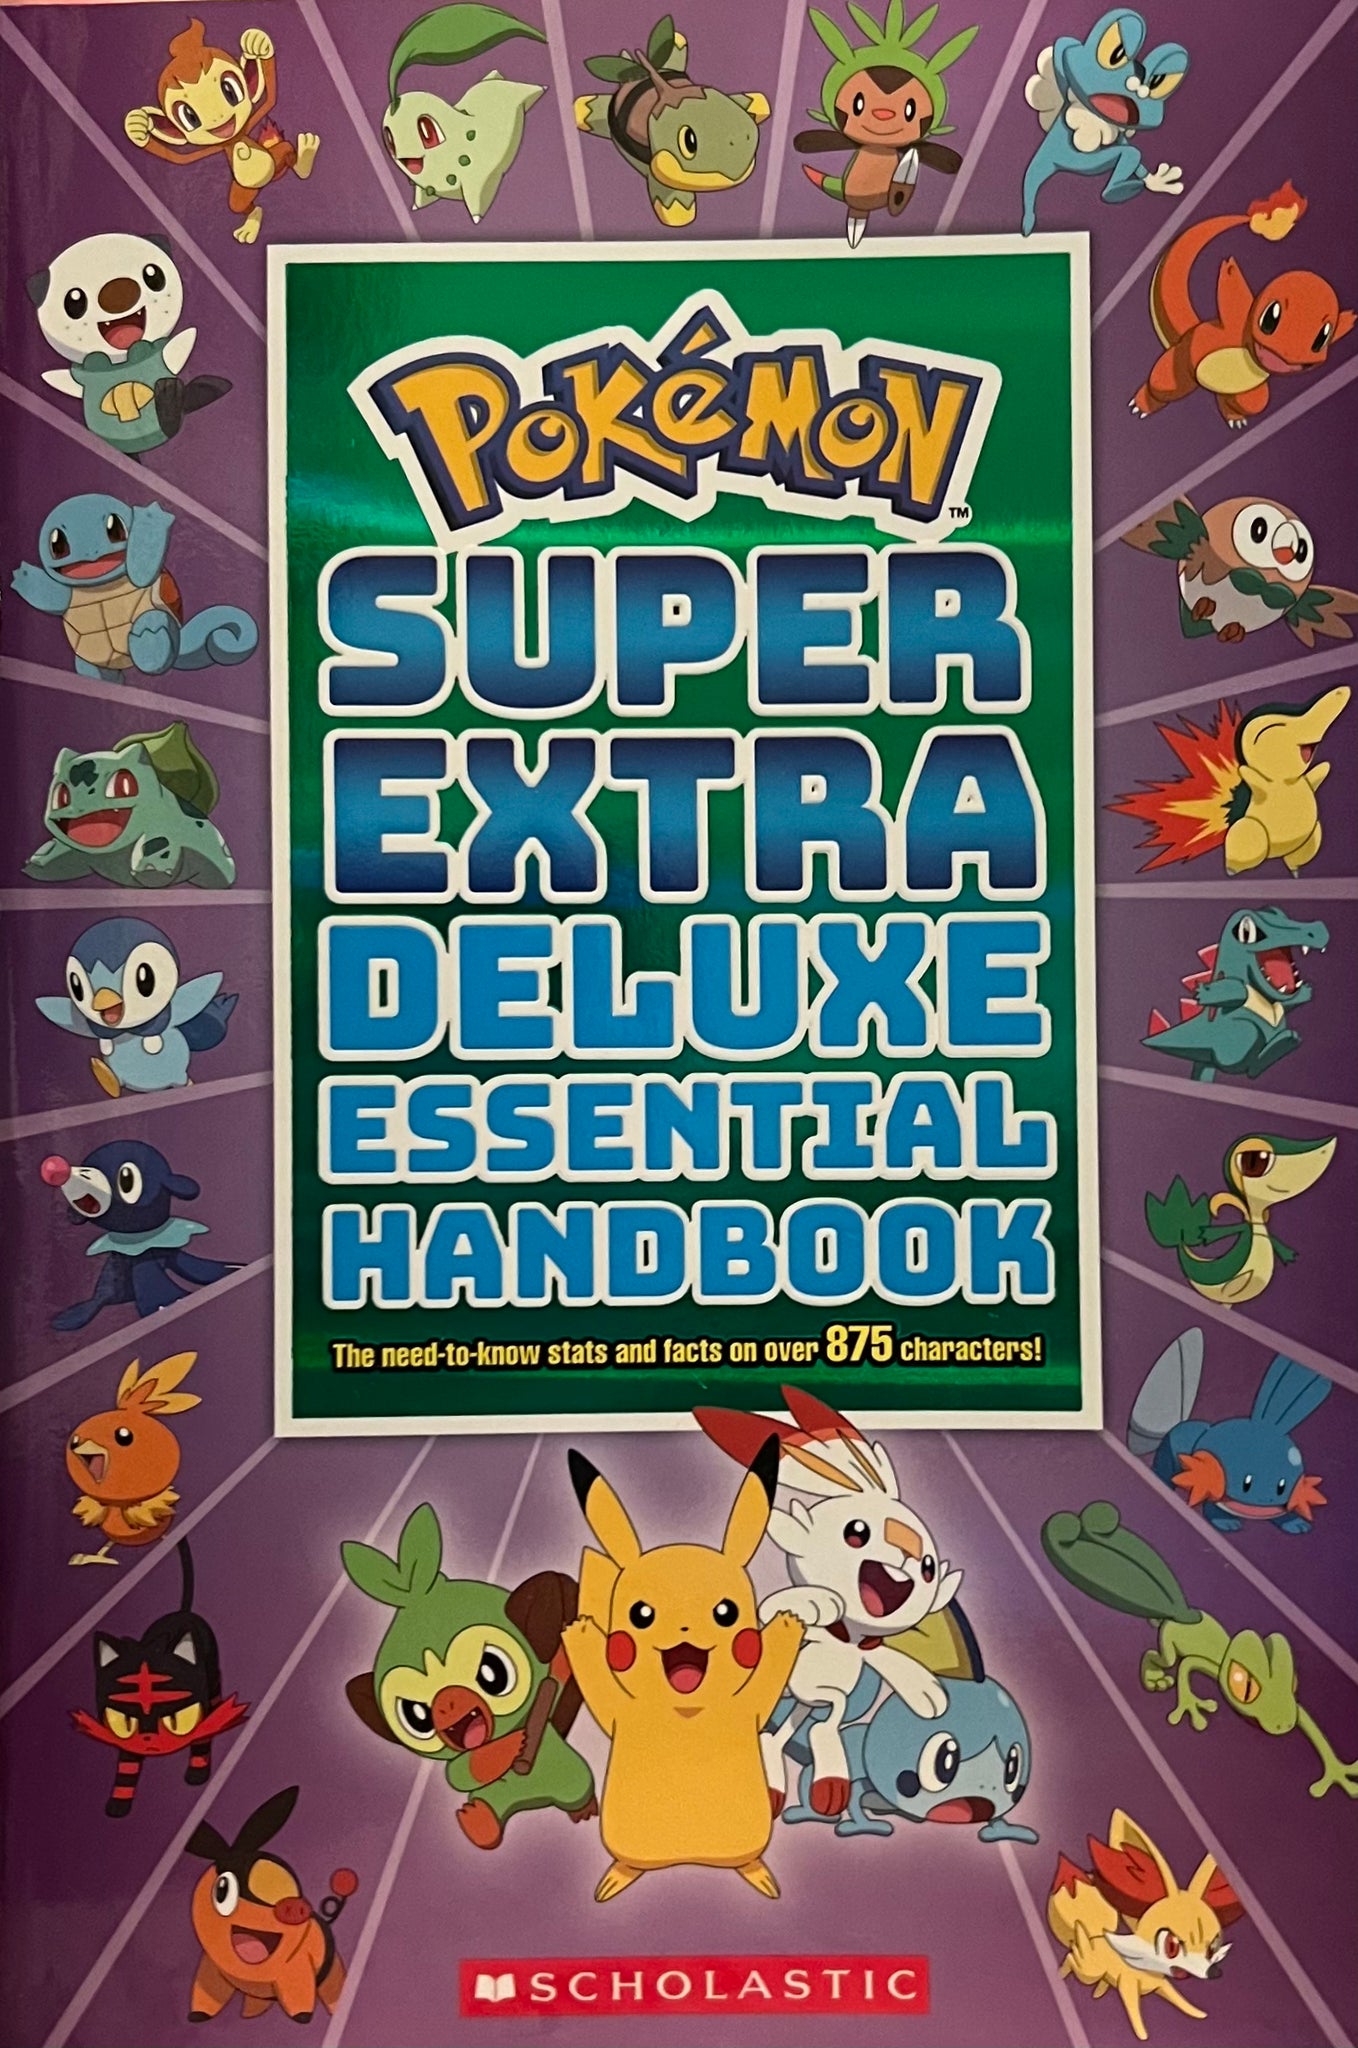 Pokémon: Super Extra Deluxe Essential Handbook